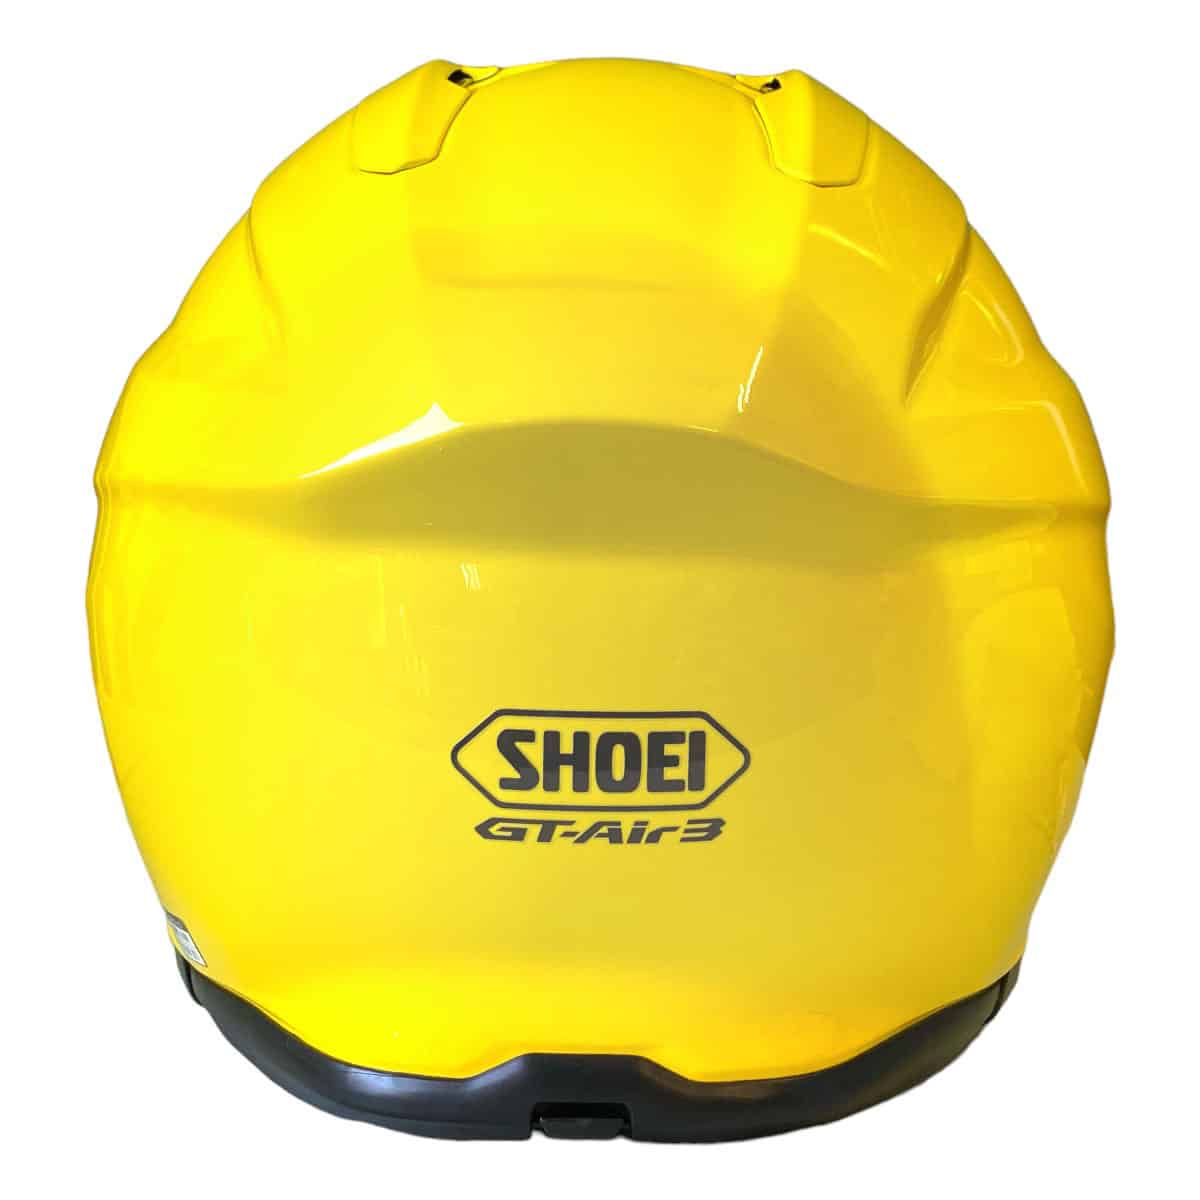 Shoei GT-Air 3 Helmet: The reference point for premium full face helmets - back